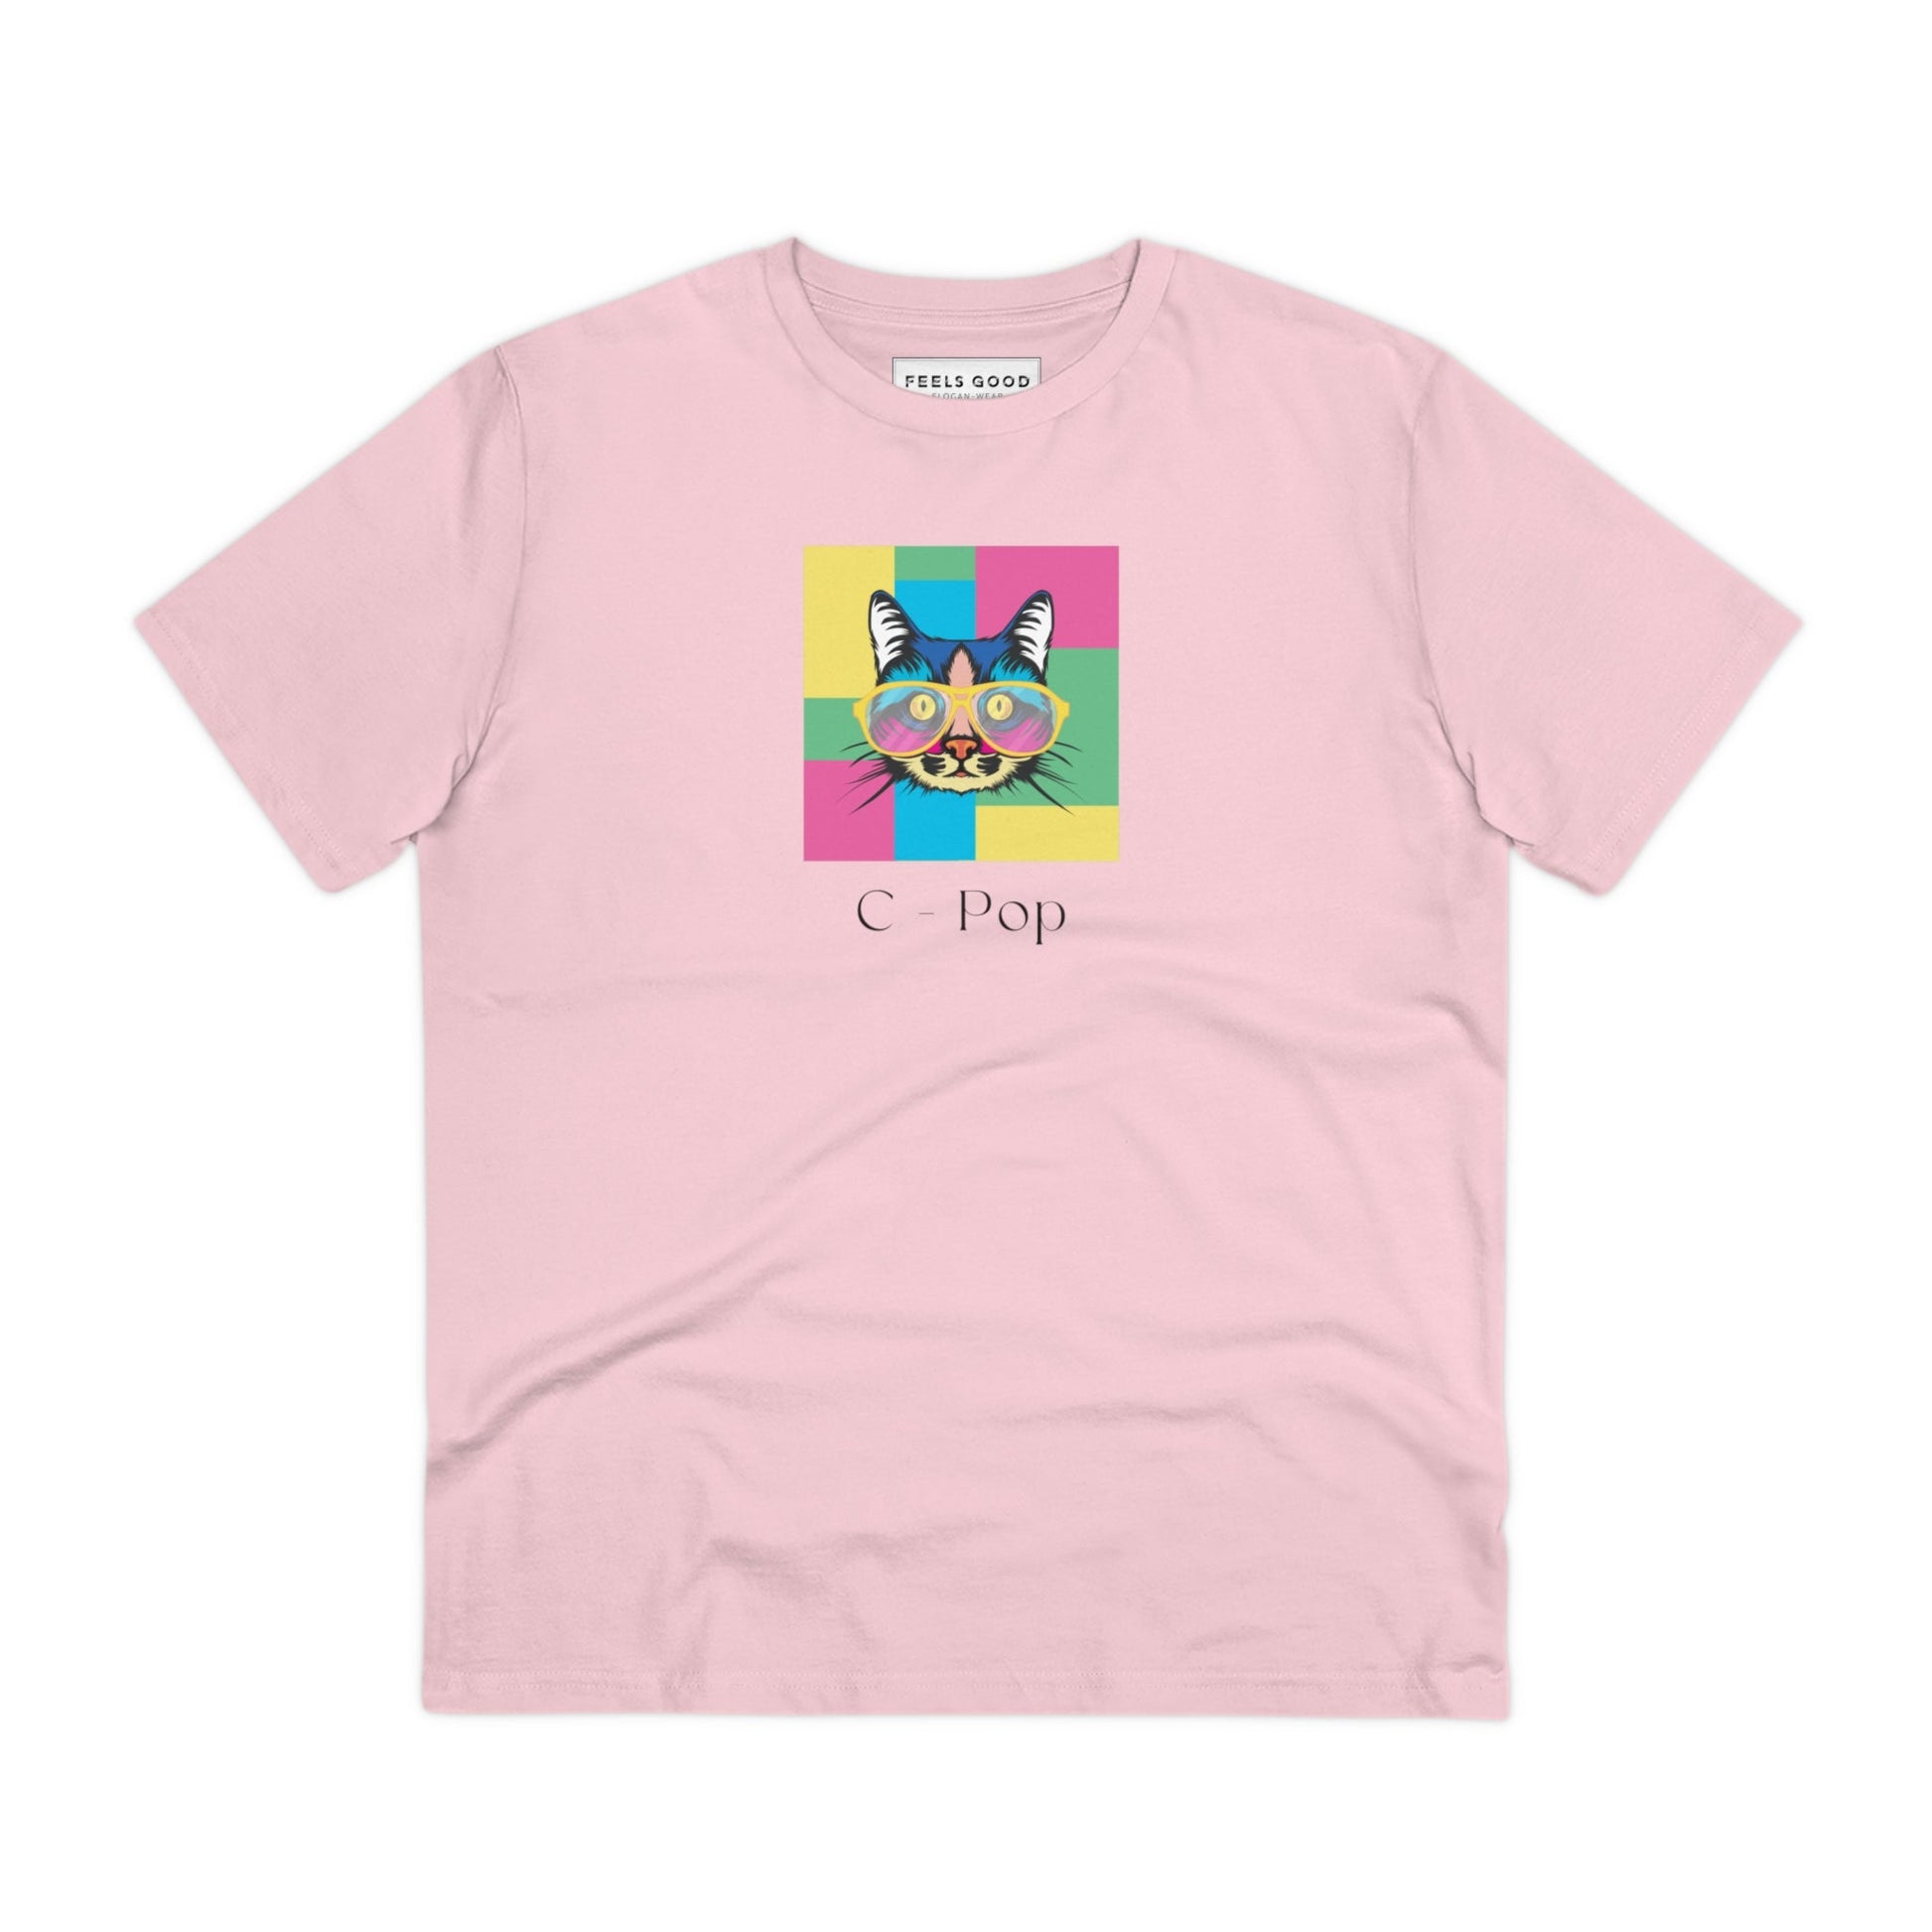 Organic Cotton 'C-Pop' Funny Cat T-shirt - Fun Cat T shirt